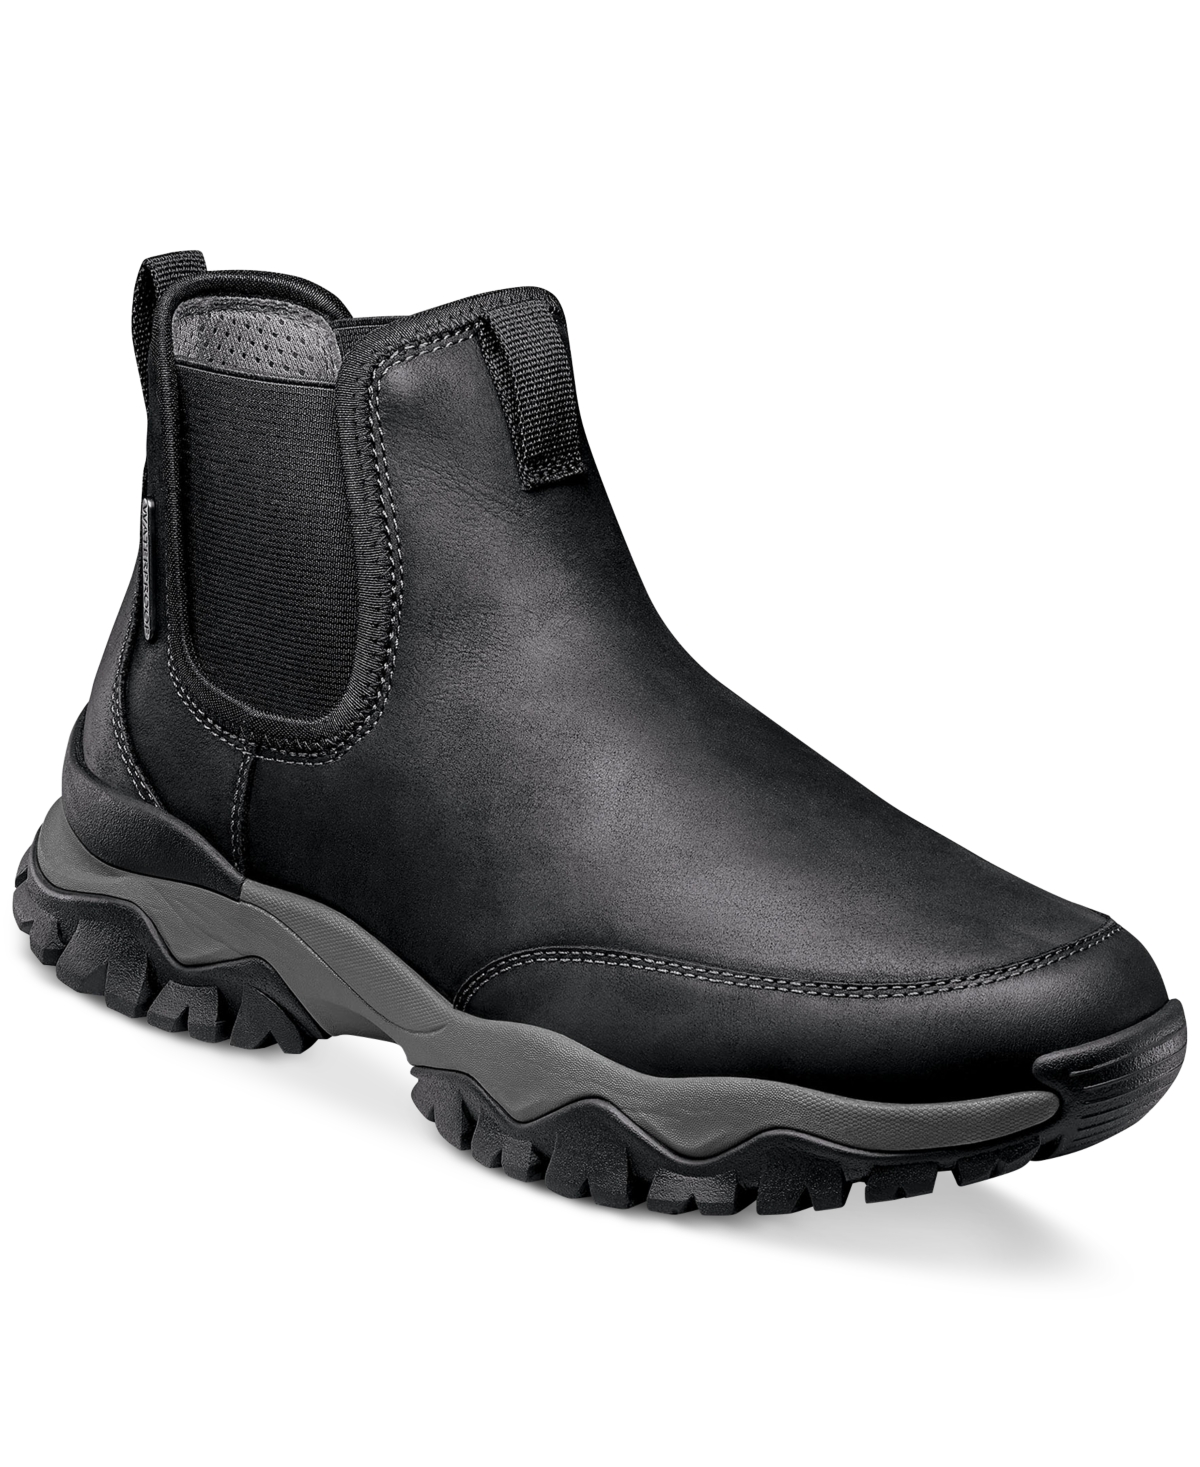 Men's Xplor Chelsea Water-Resistant Boot - Black